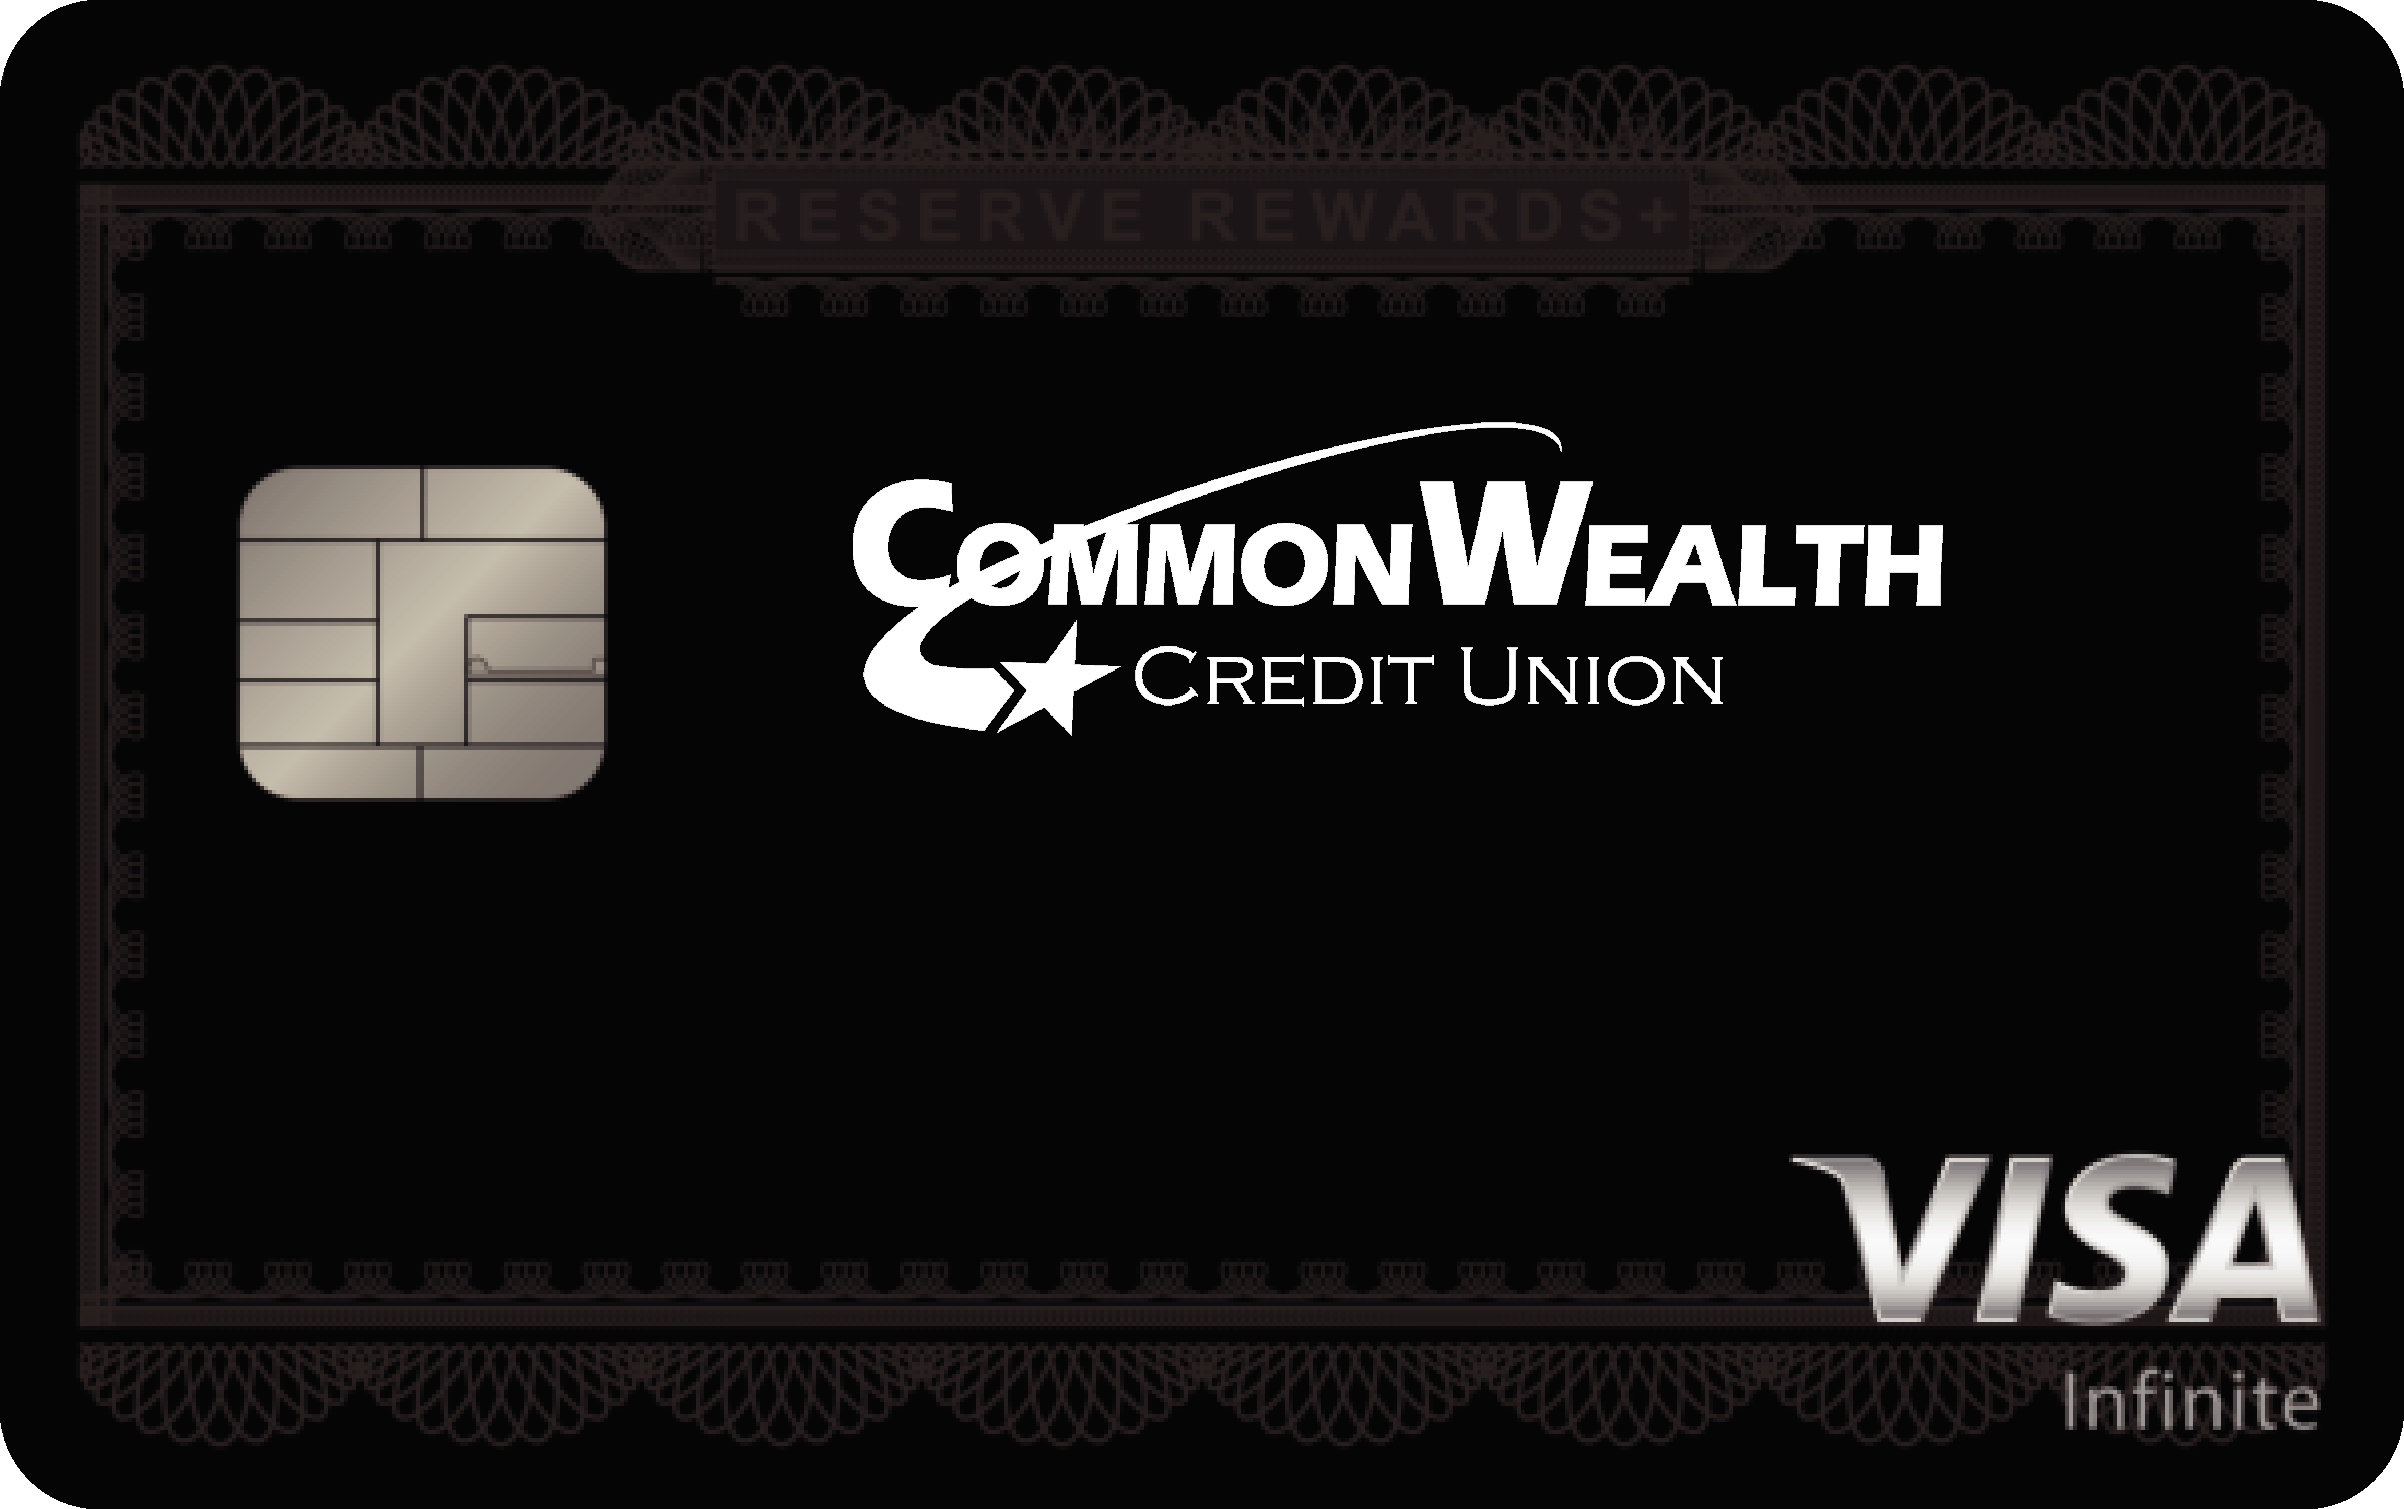 CommonWealth Credit Union